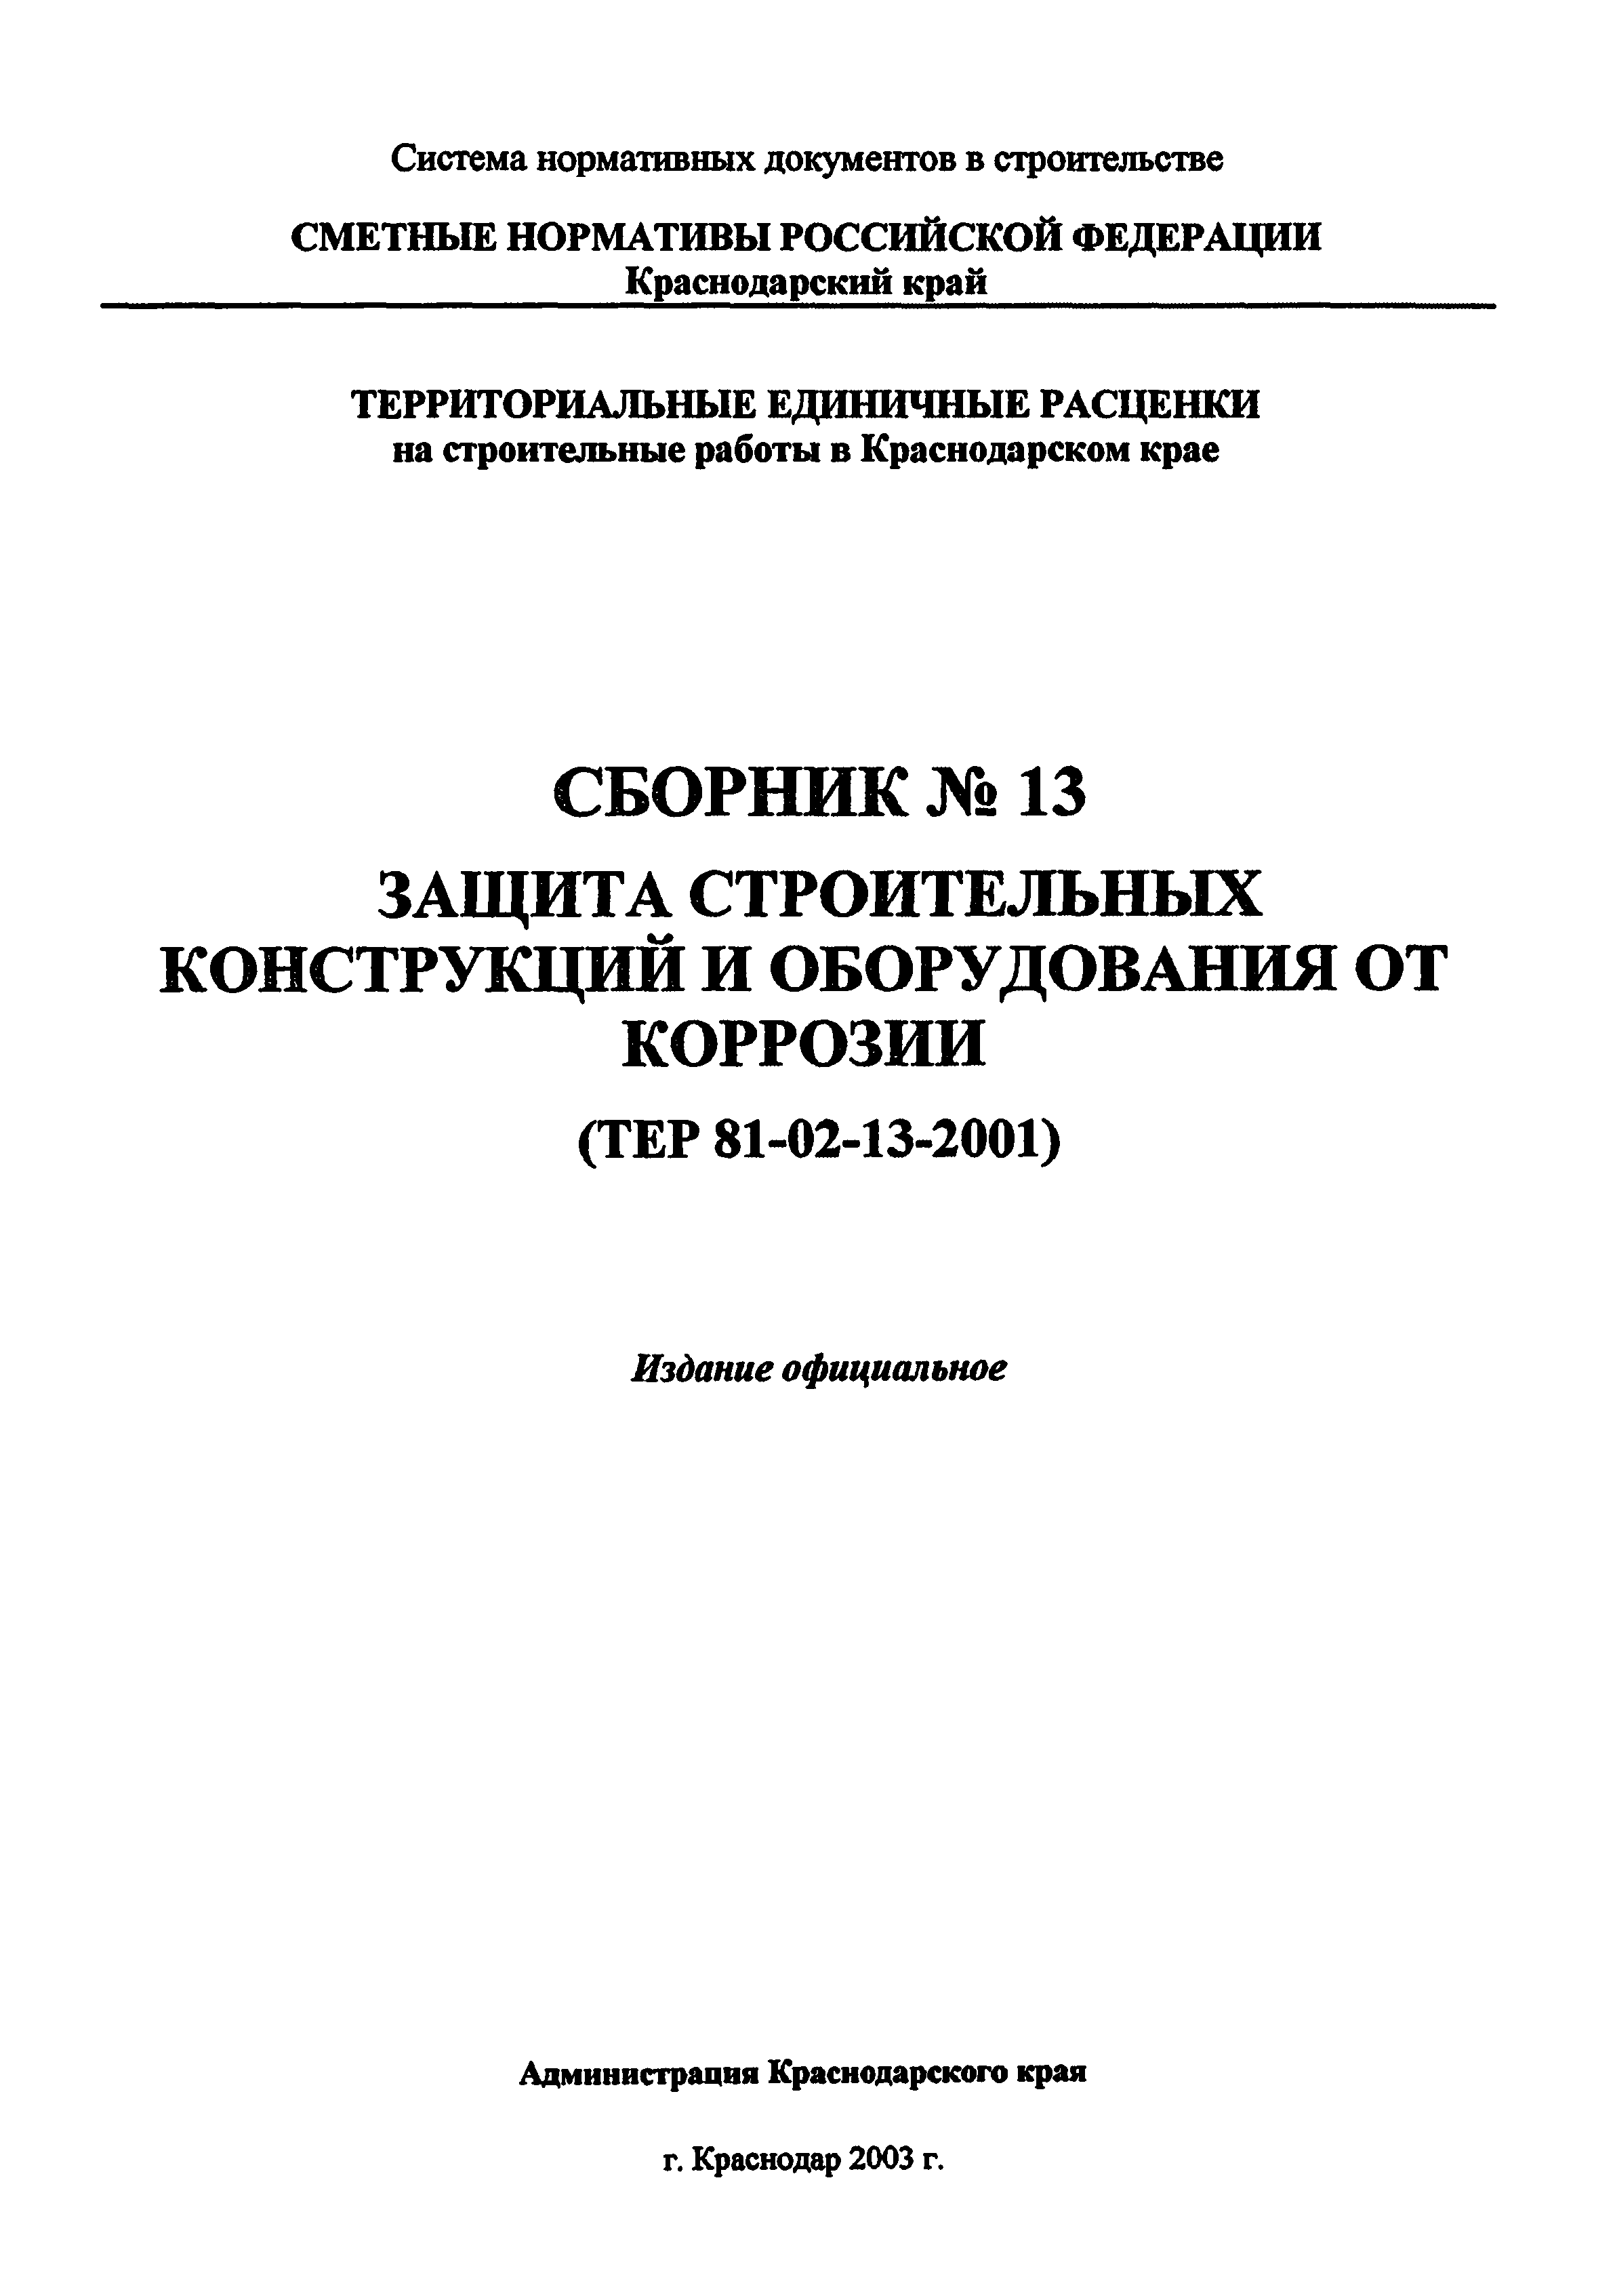 ТЕР Краснодарский край 2001-13